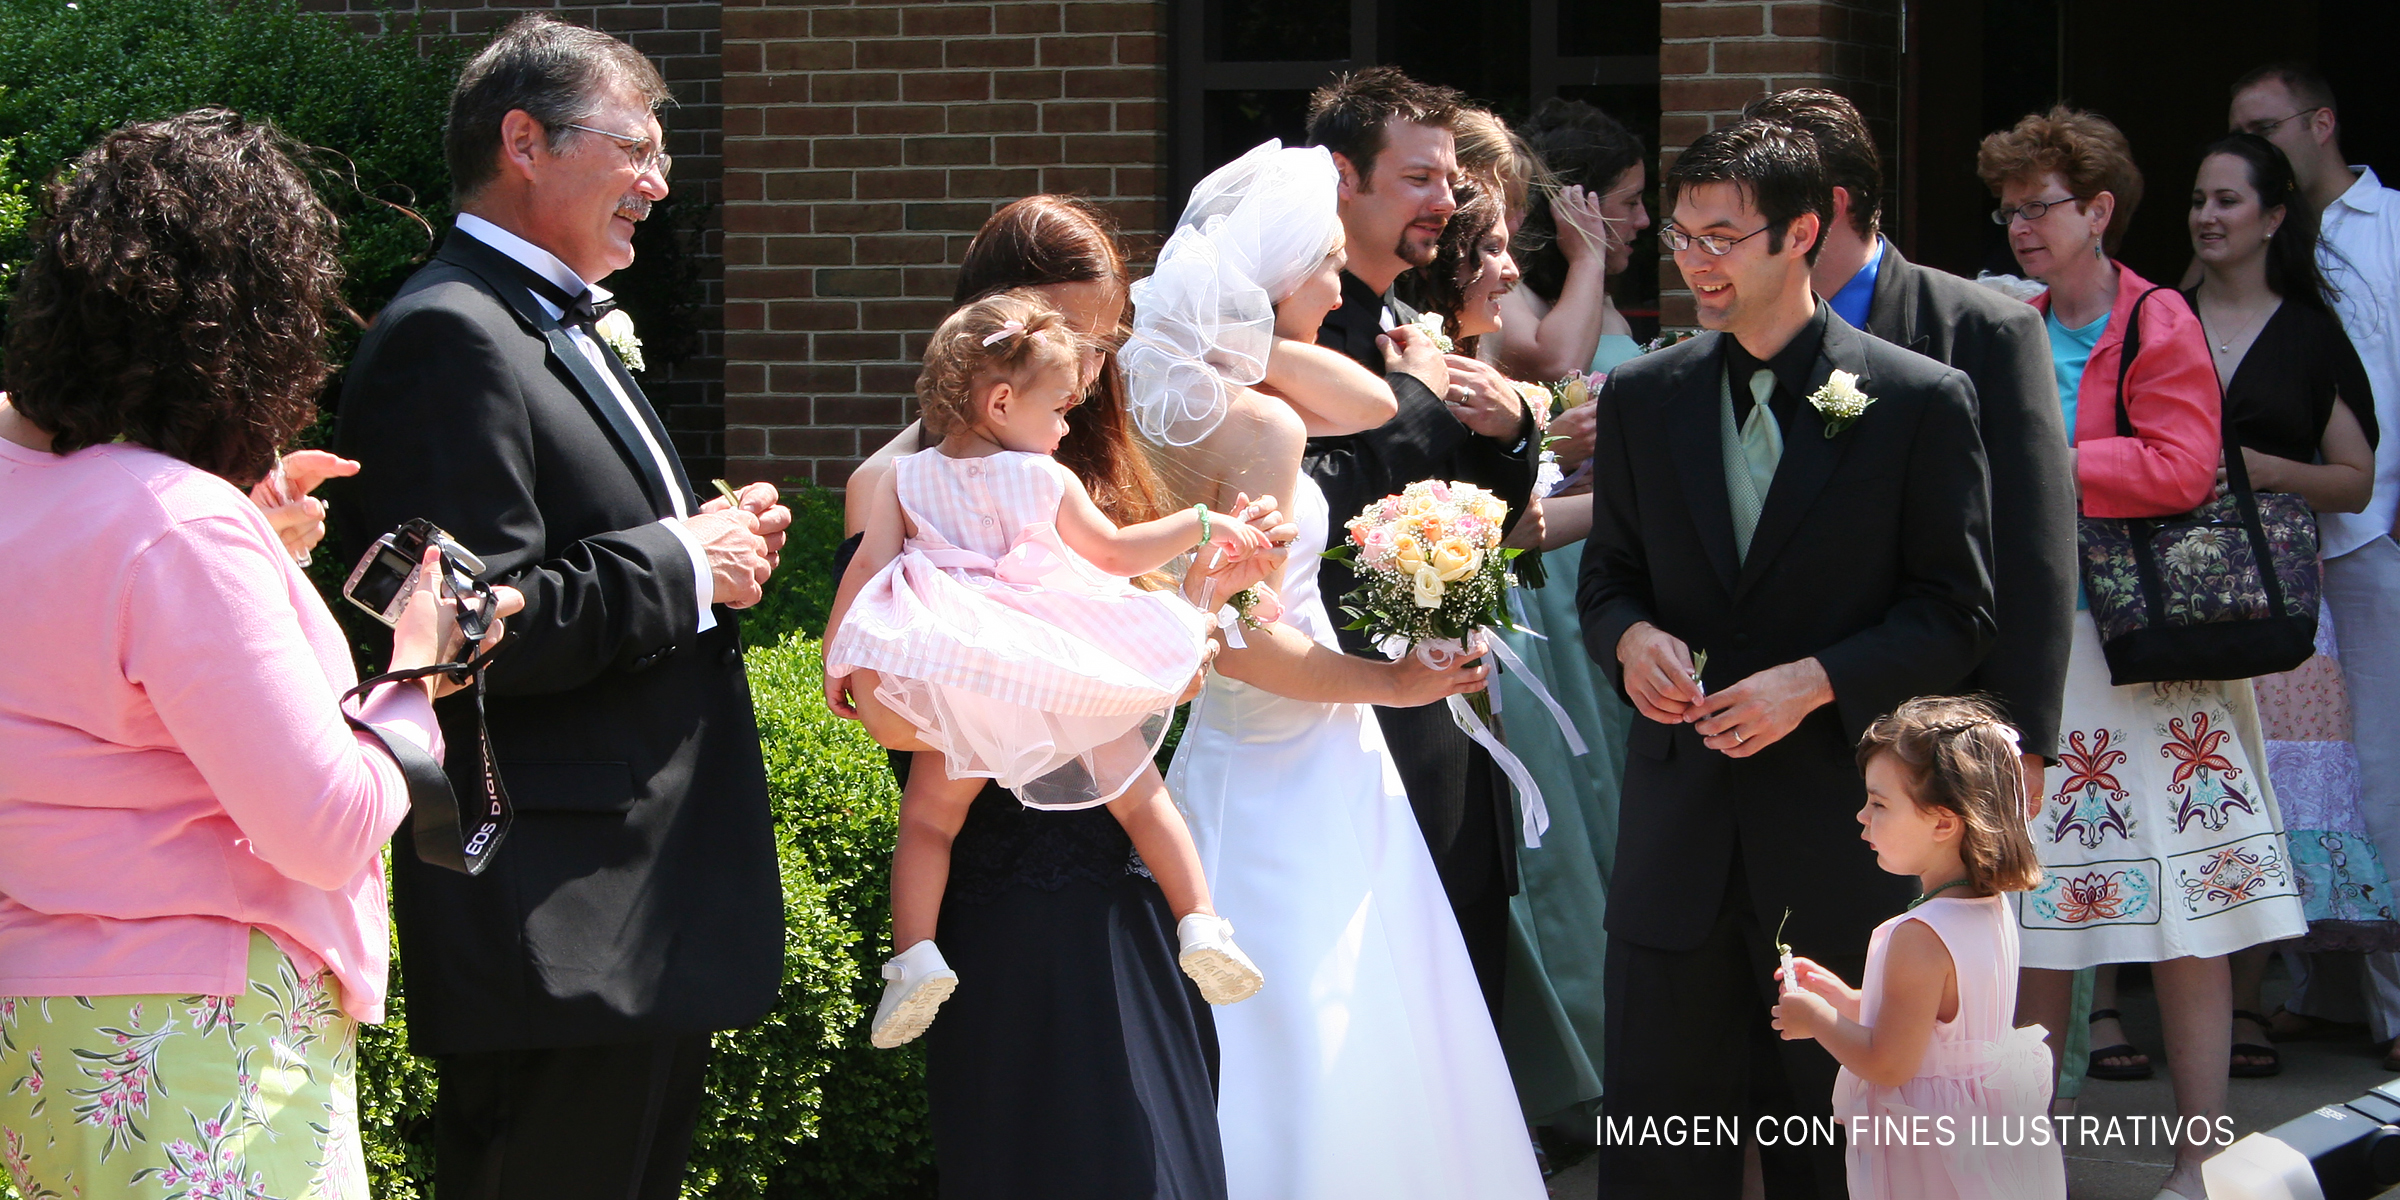 Personas saliendo de una boda. | Foto: flickr.com/Gavin St. Ours (CC BY 2.0)